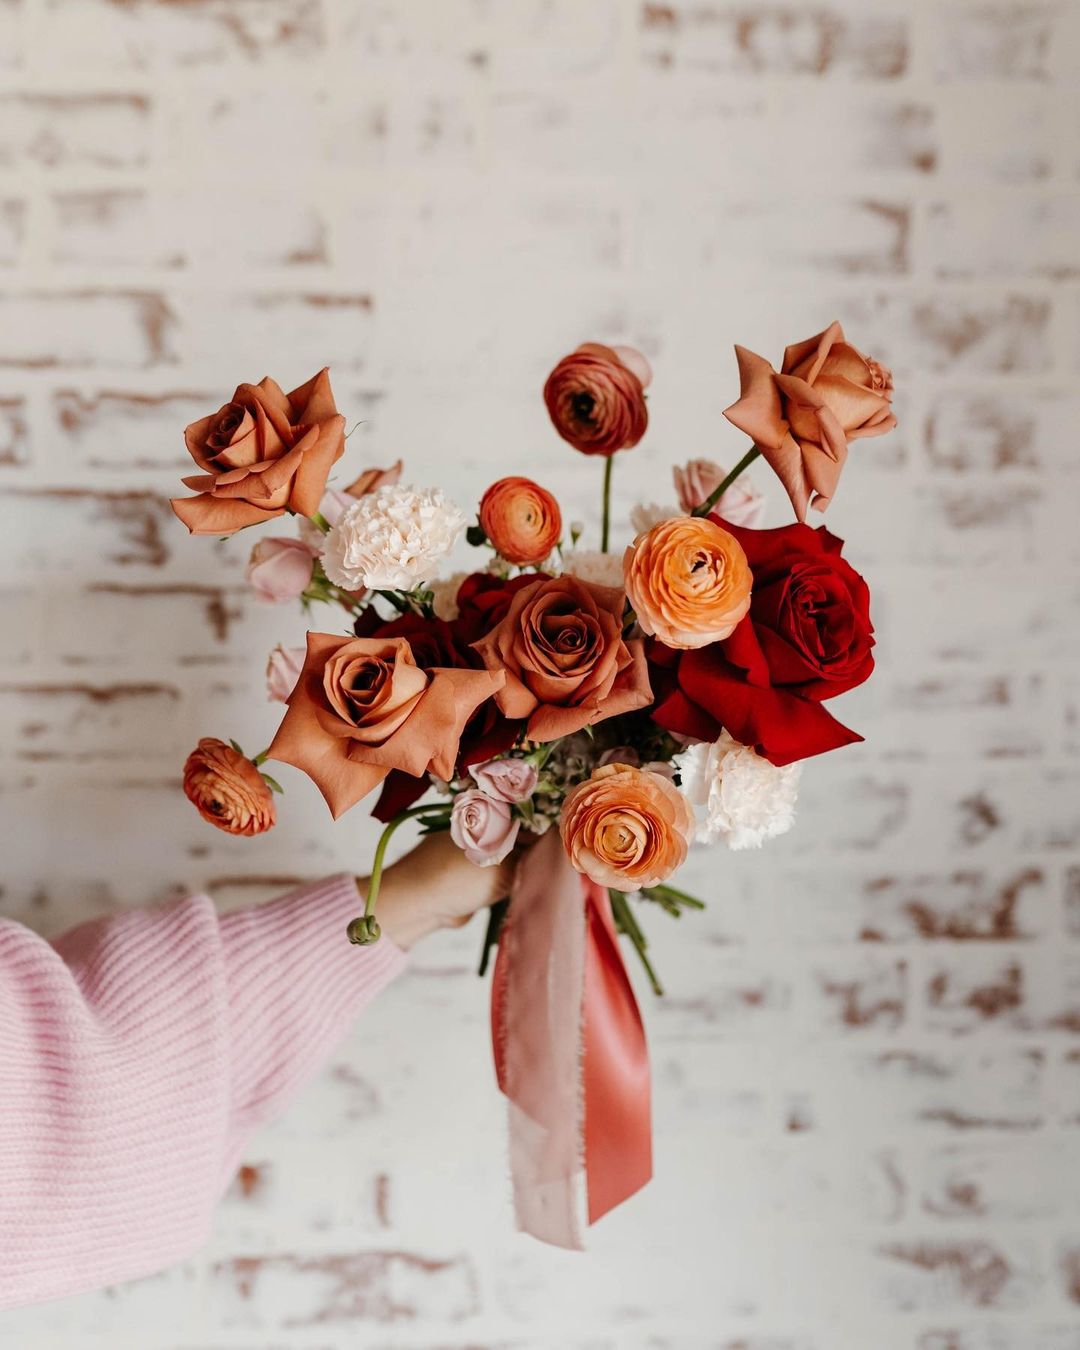 What is Valentine's Day 2022 Going to Bring Us? Valentine's Bouquet